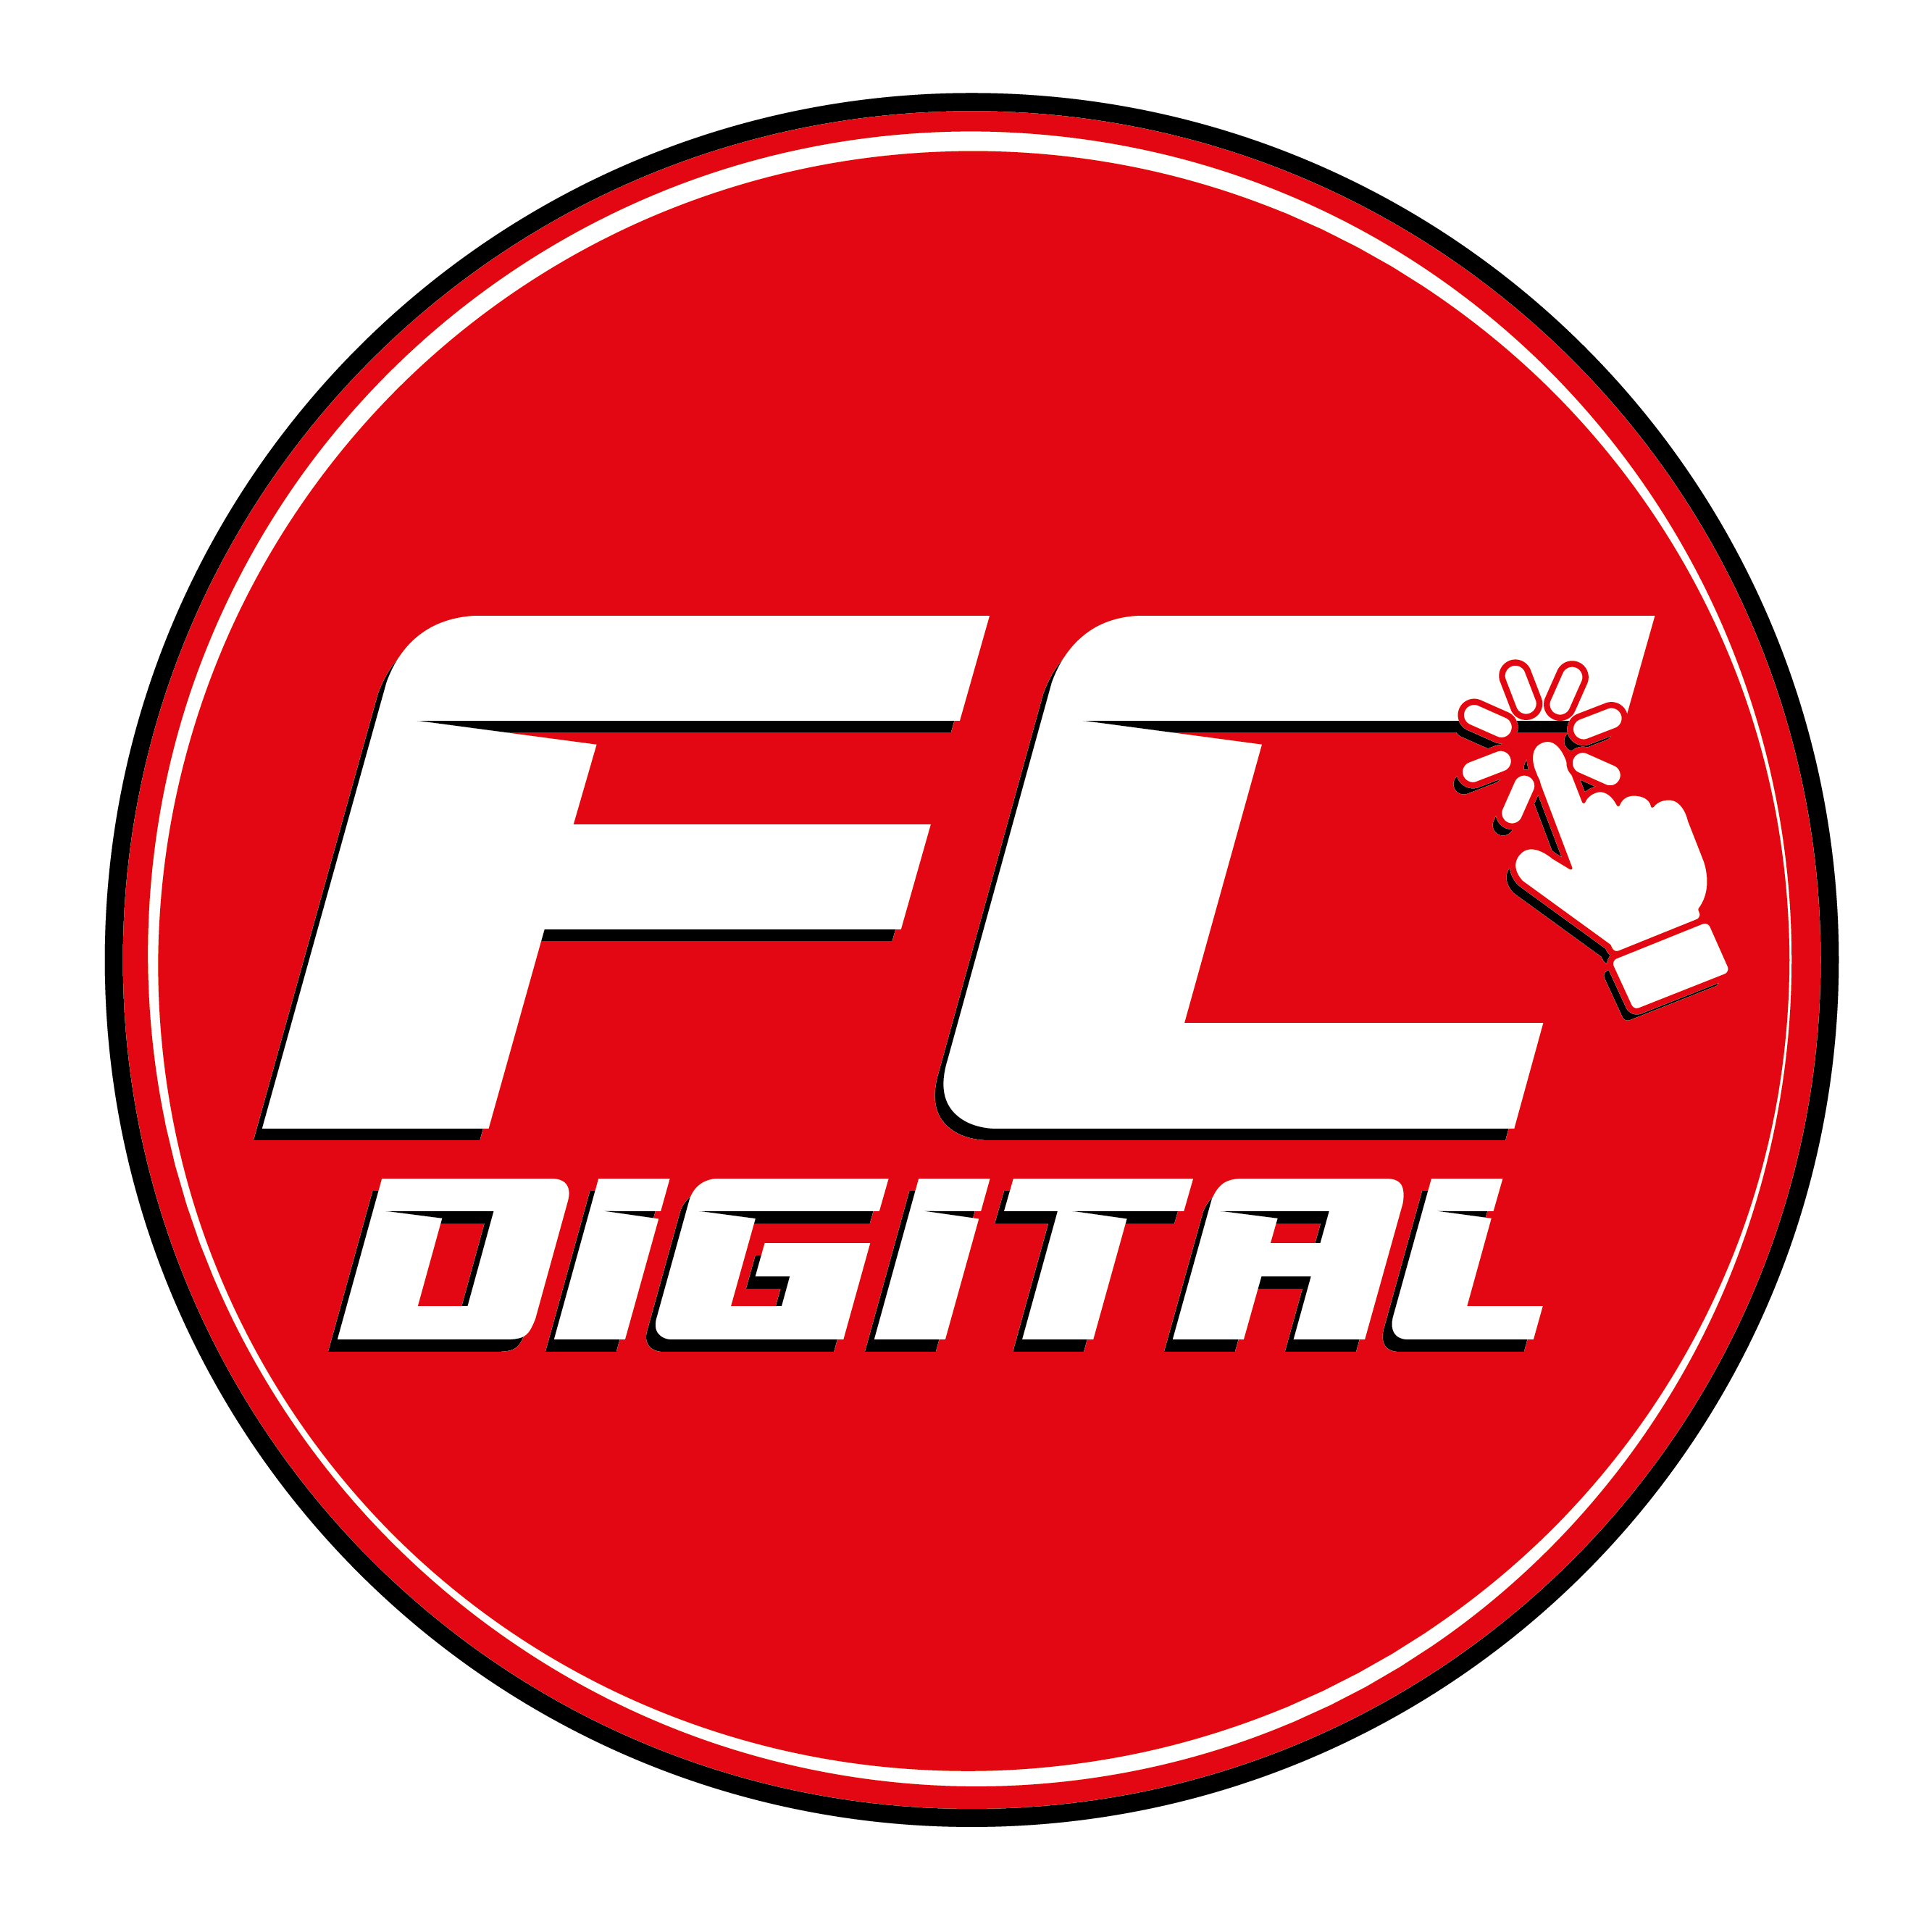 FC DIGITAL